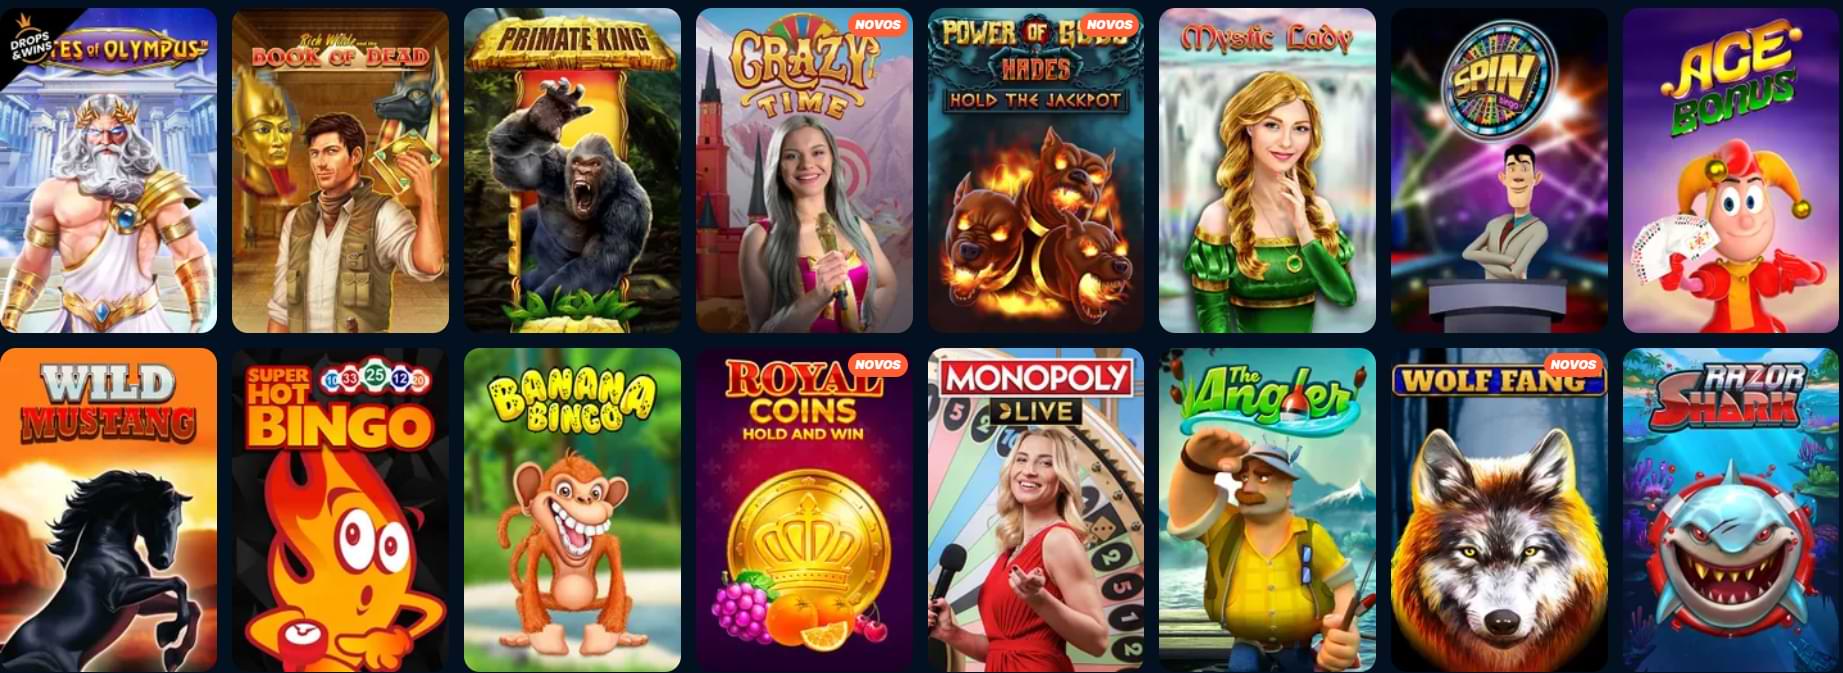 casino online playzilla